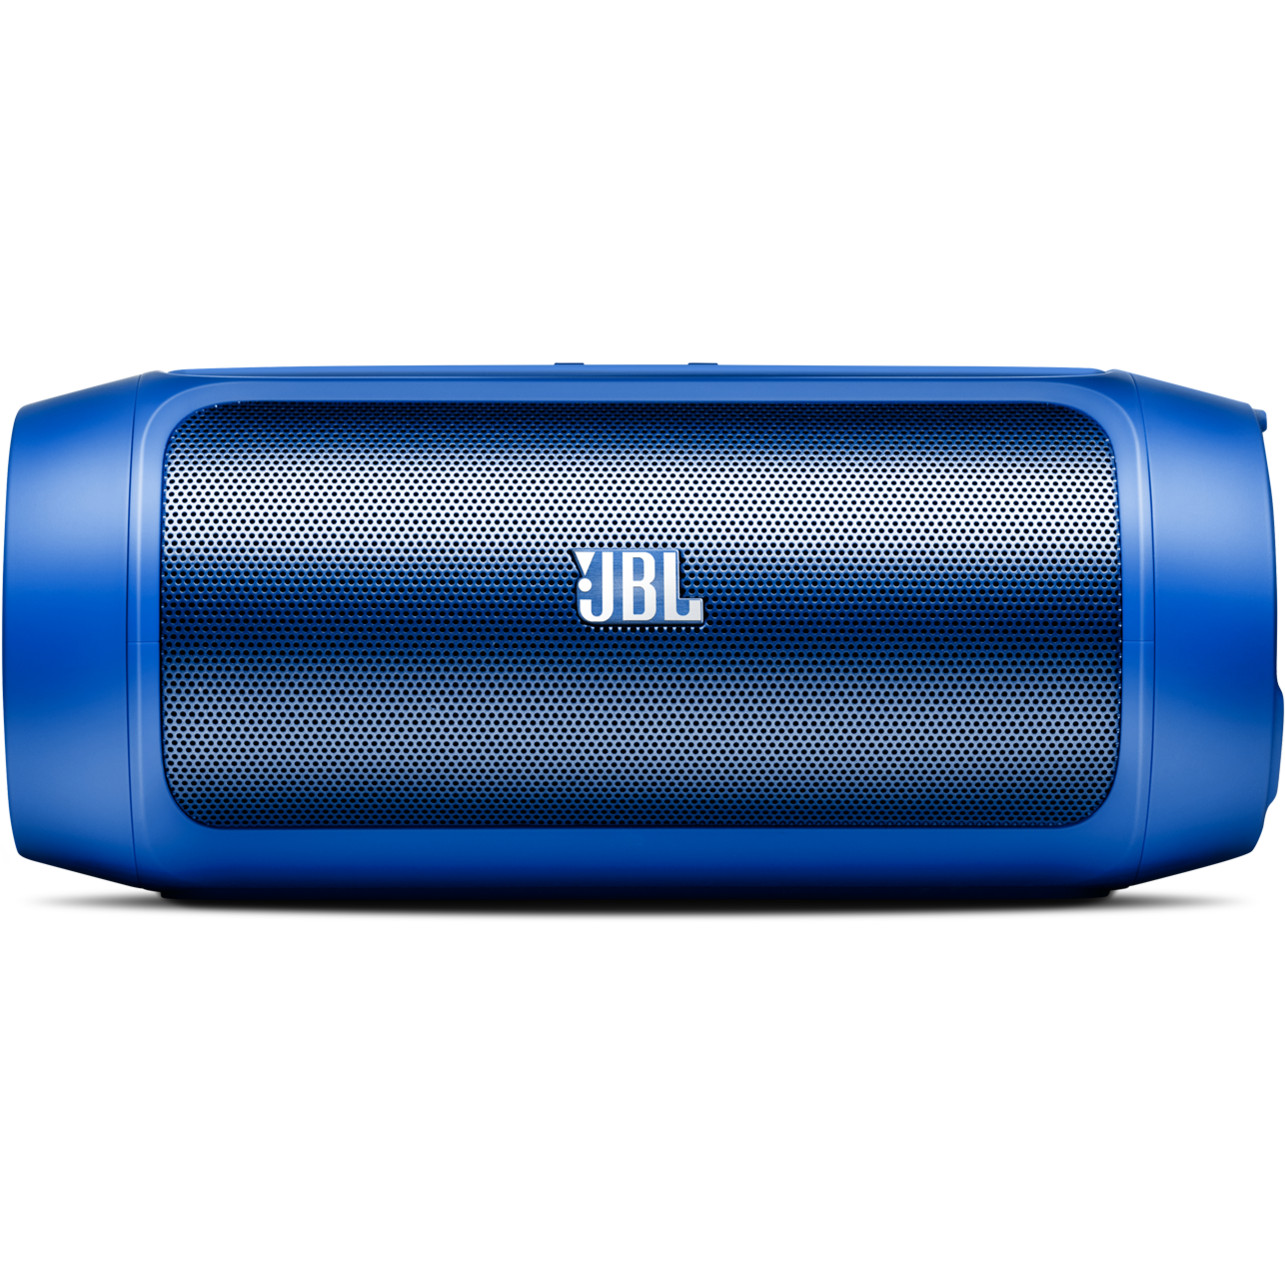  Boxa portabila JBL Charge 2, Albastru 